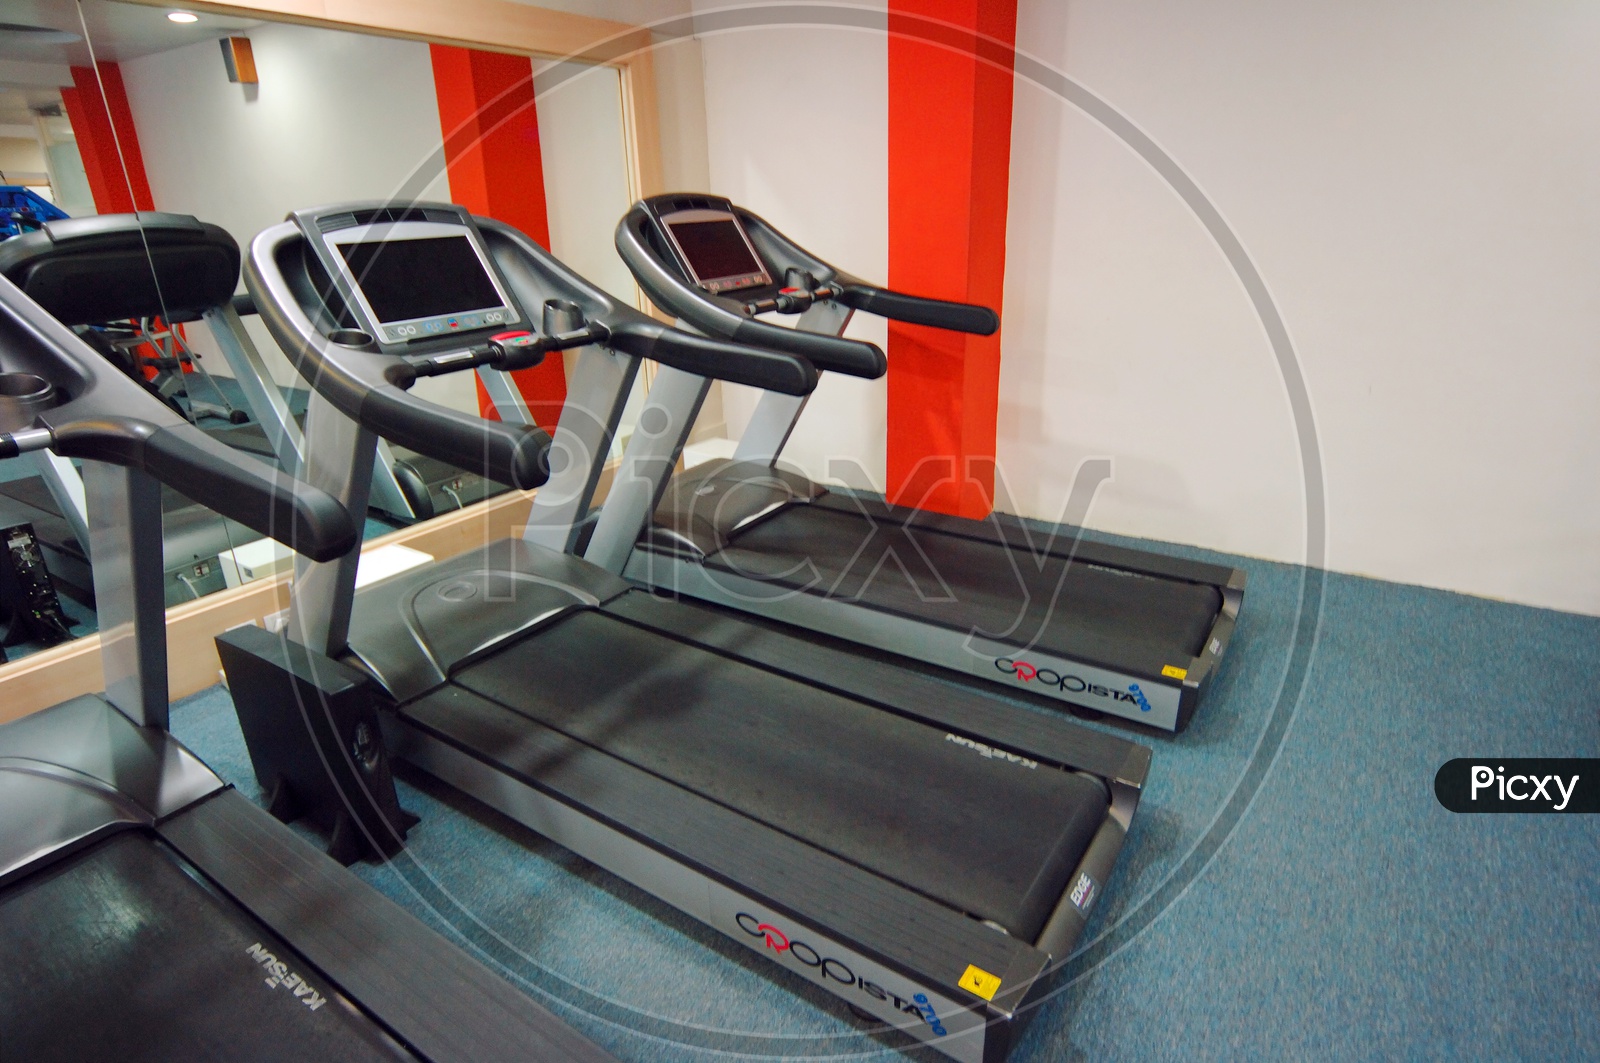 Treadmills in the gym - Gym equipment